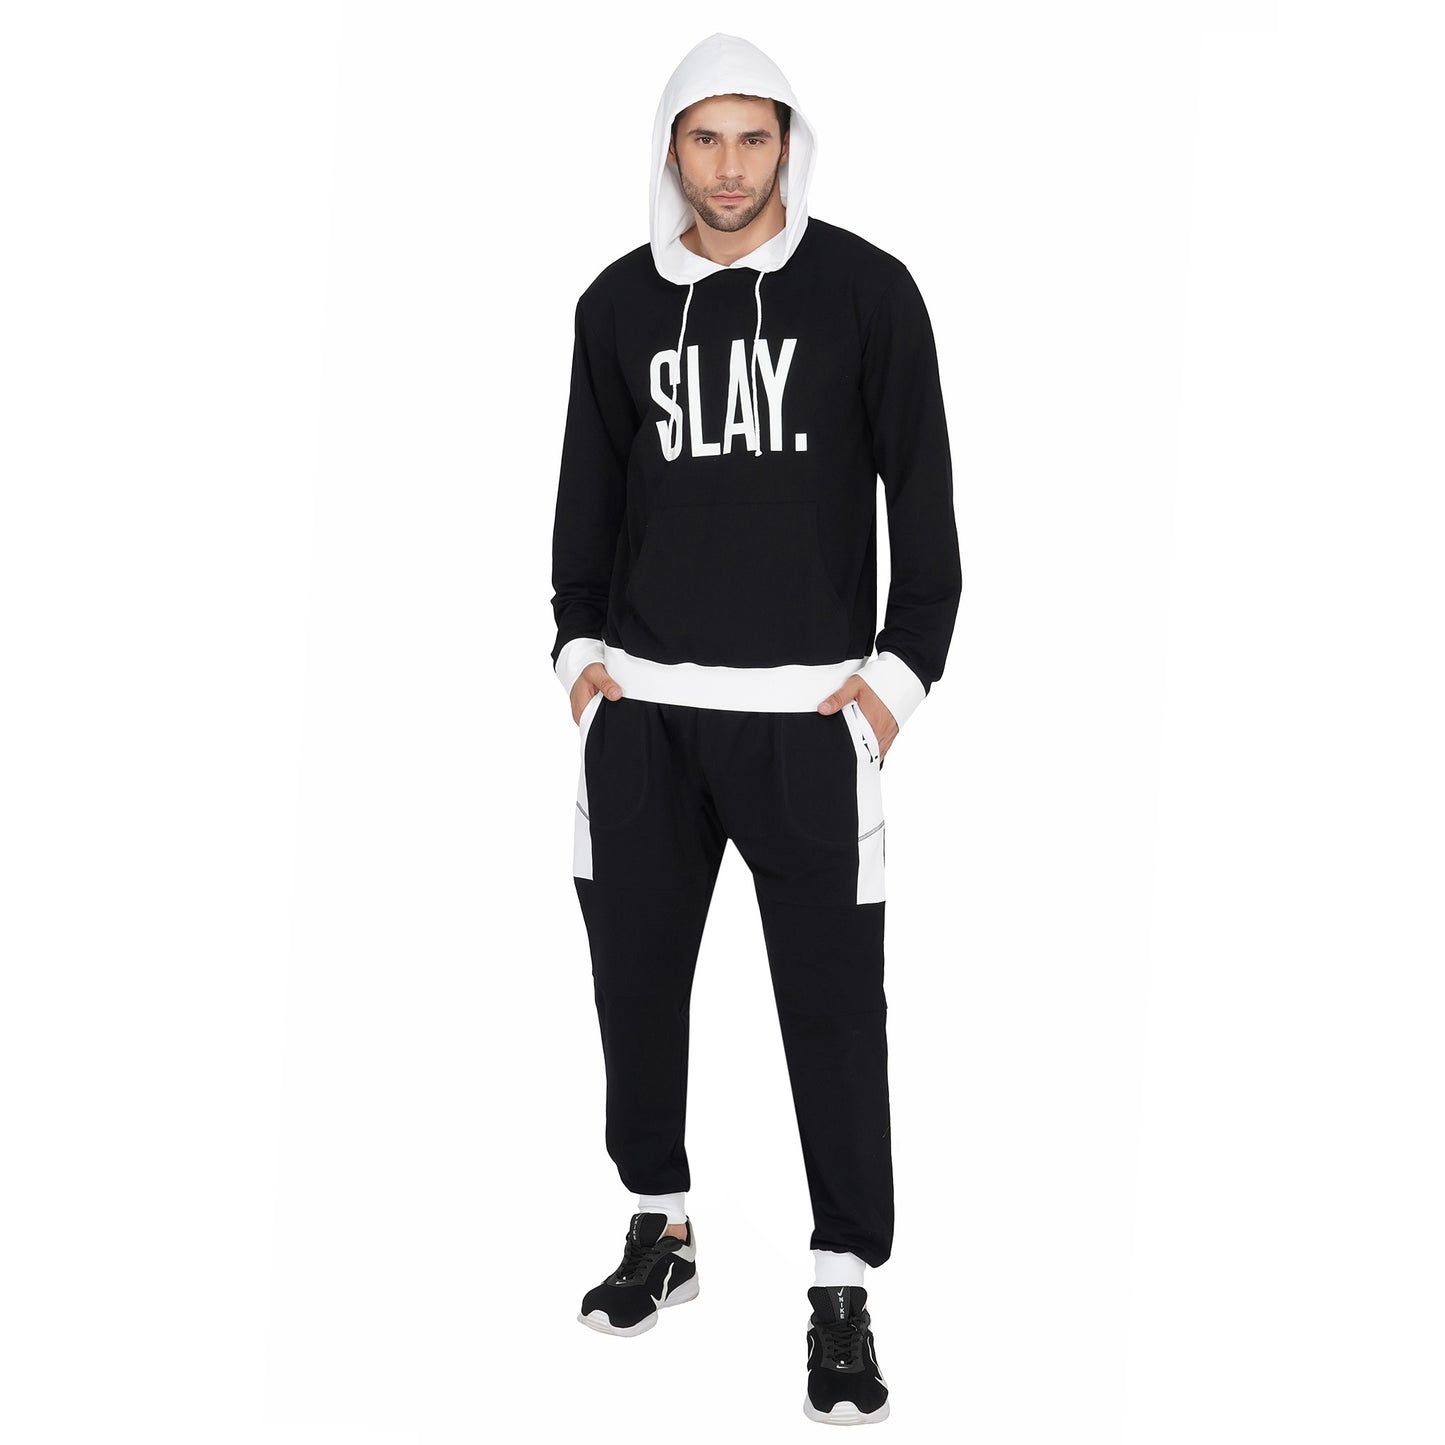 SLAY. Classic Men's Colorblock Black & White Tracksuit-clothing-to-slay.myshopify.com-Tracksuit